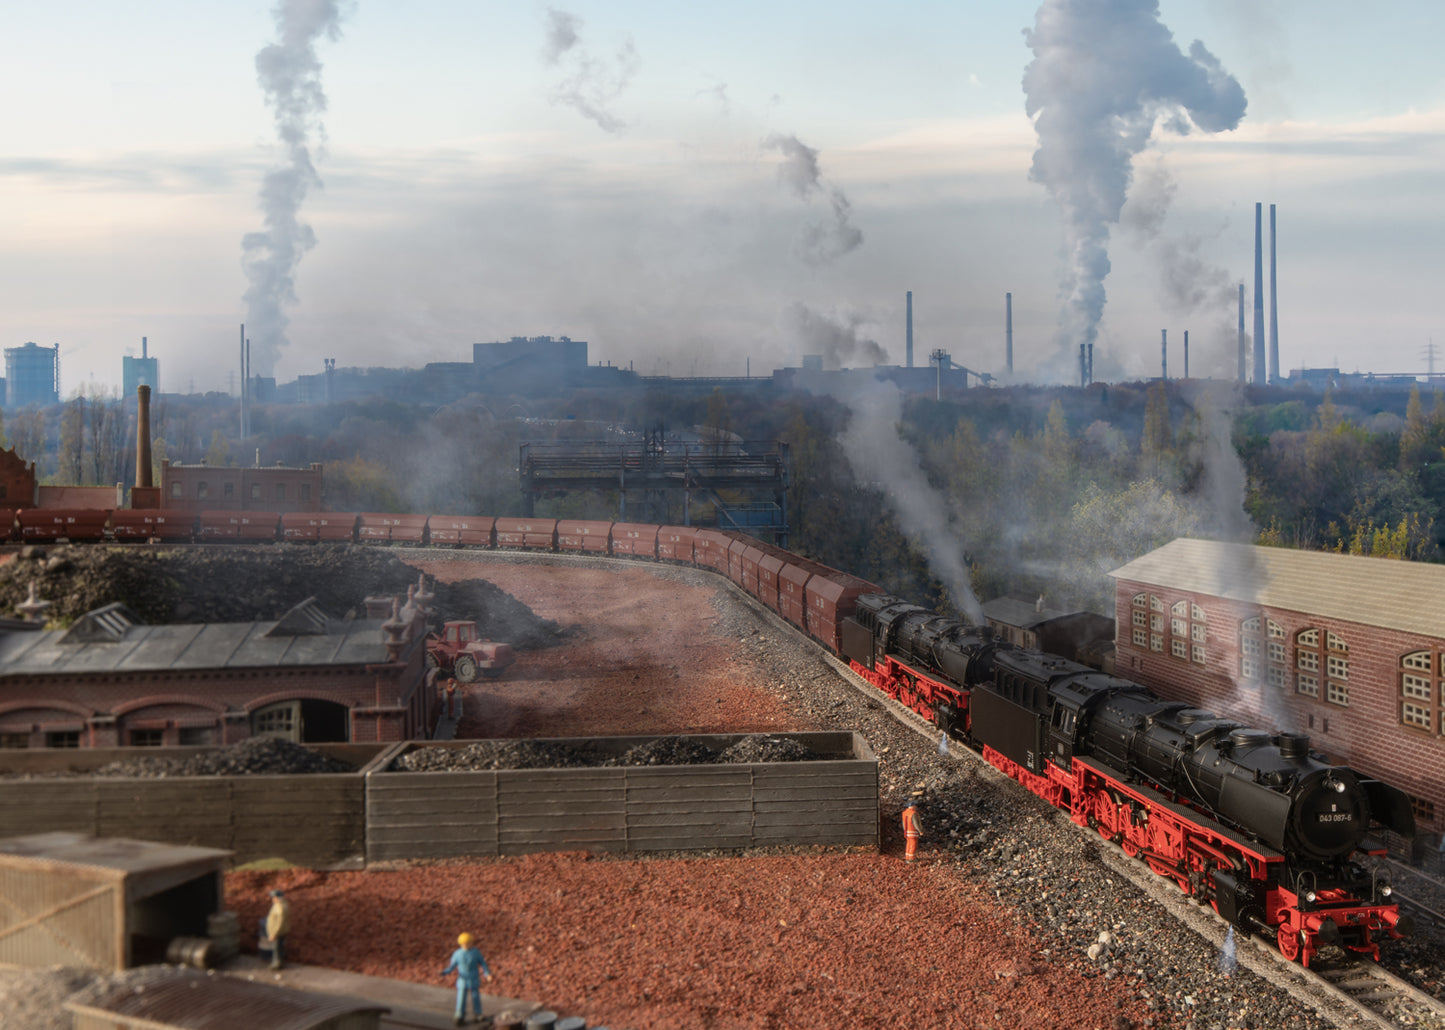 Trix HO 22986 Freight Steam Locomotive, BR 043 Öl, DB, Ep.IV 2021 New Item